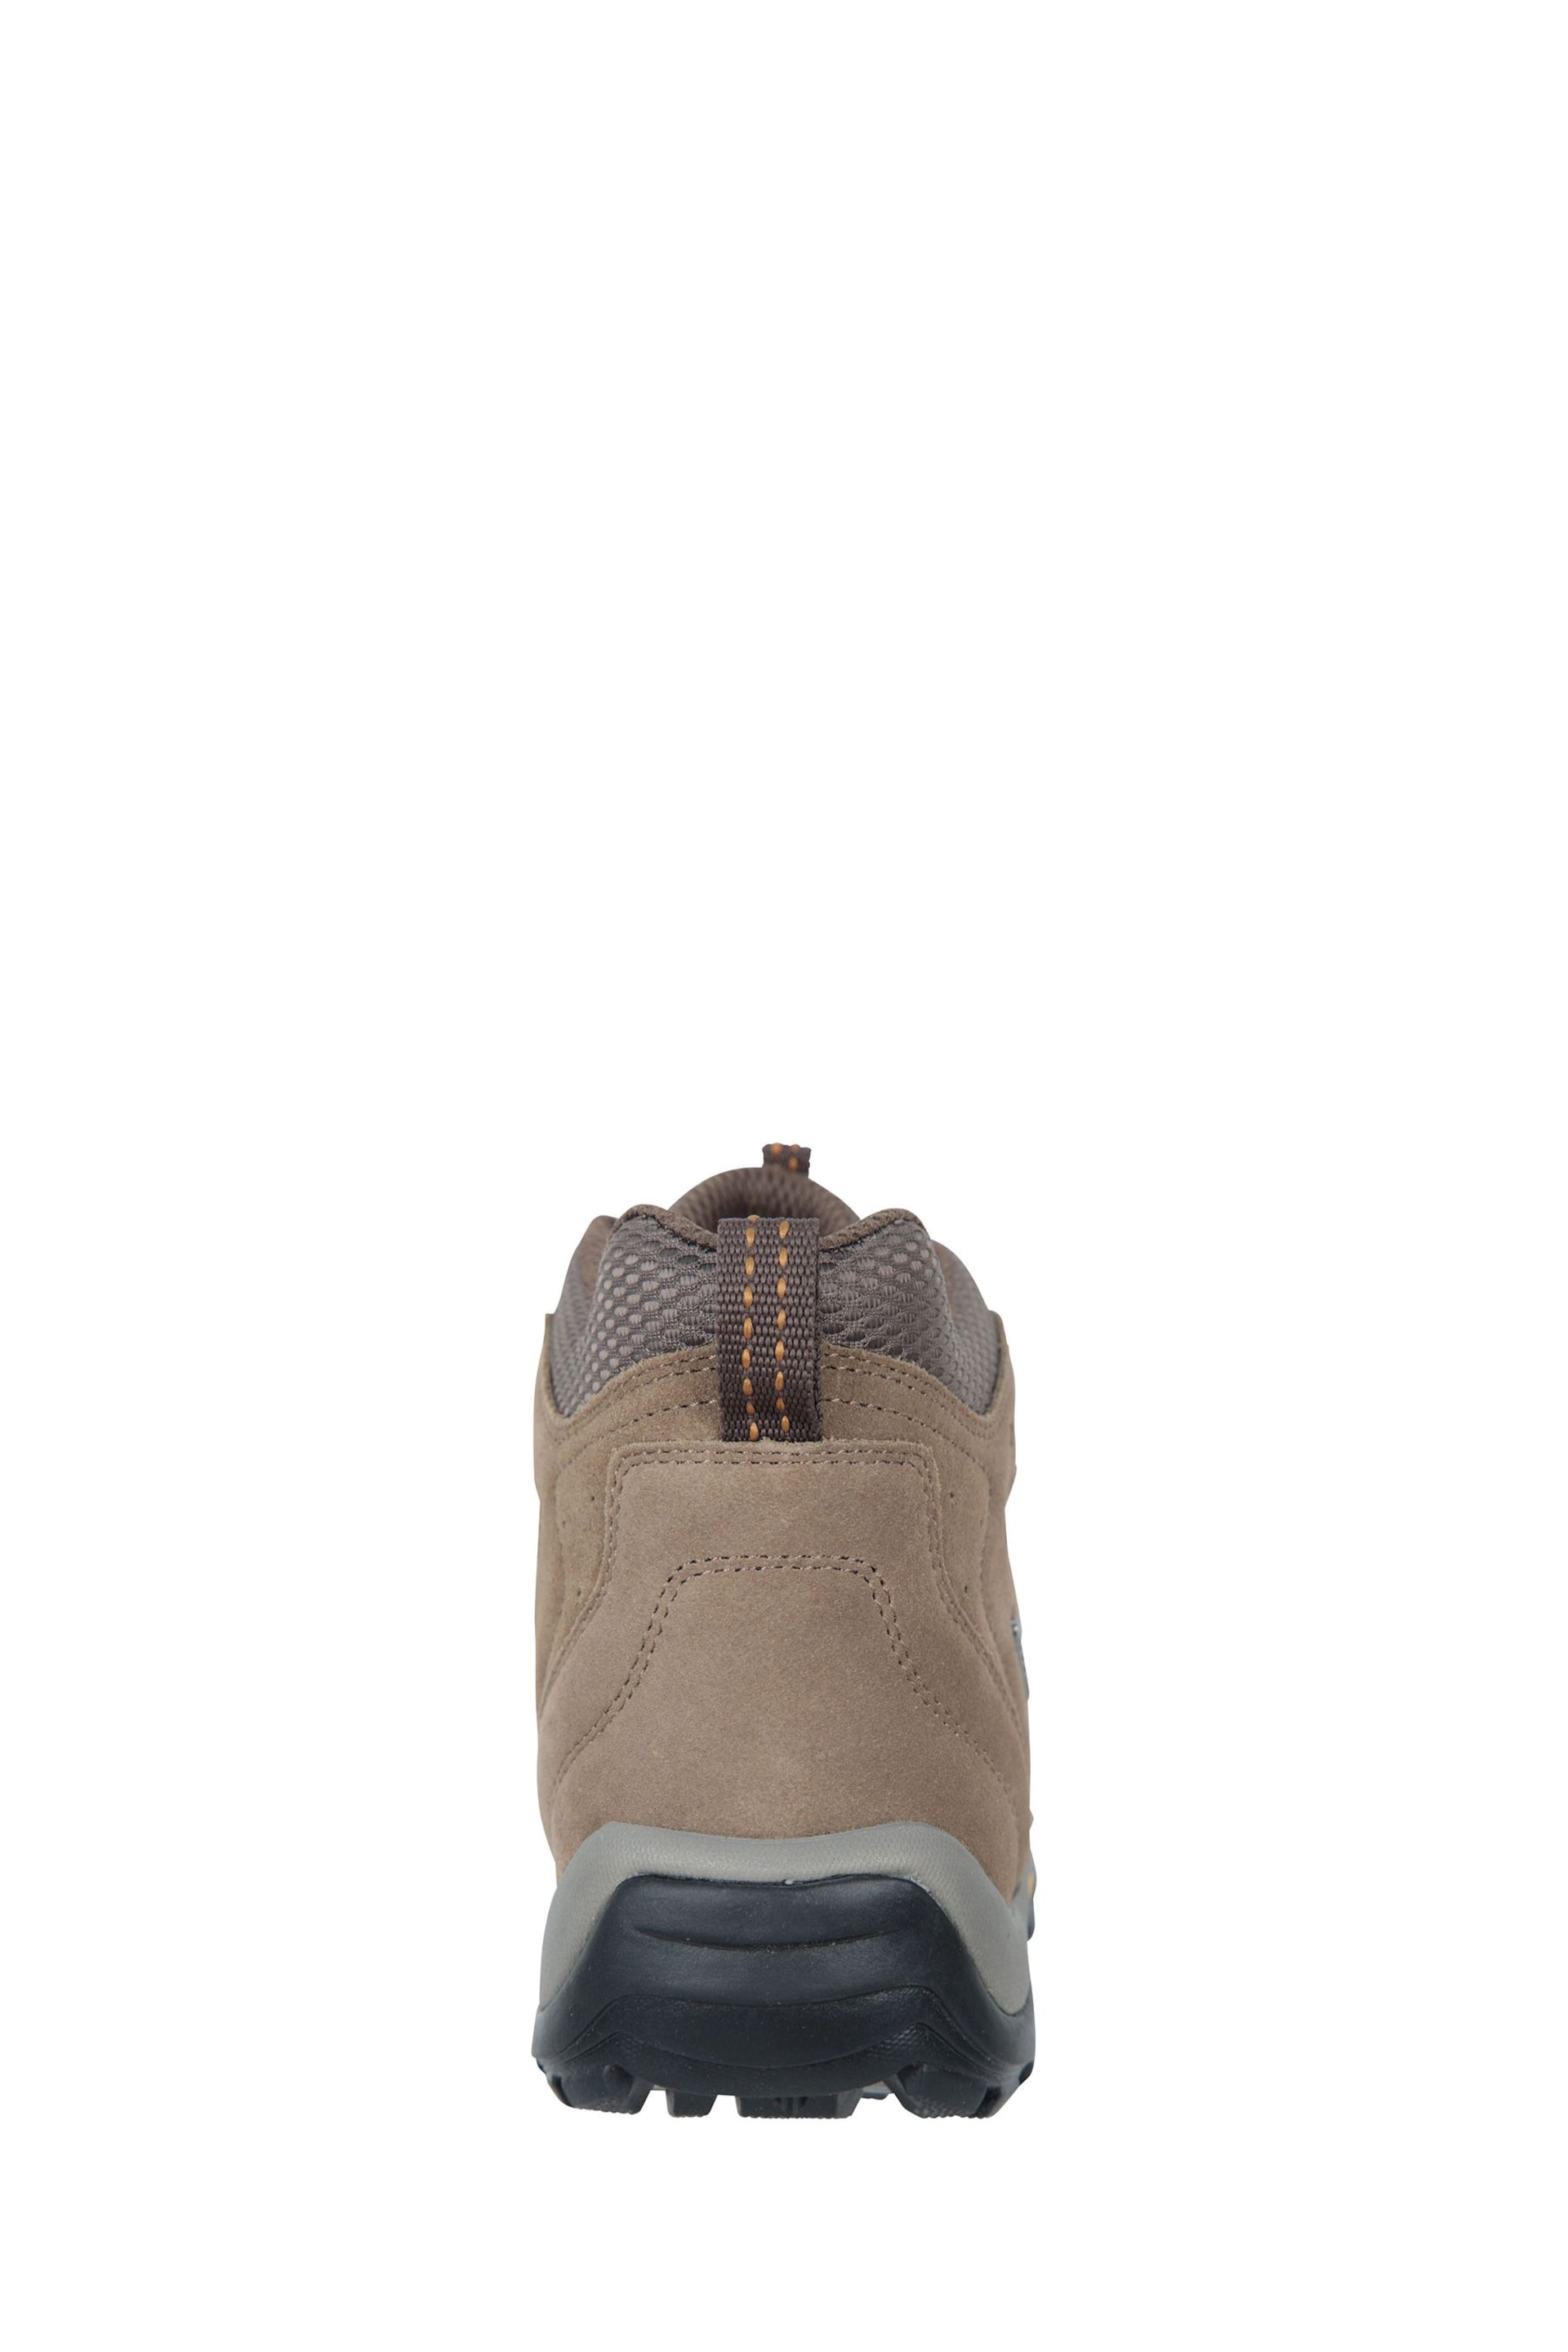 Mountain Warehouse Brown Mens Wide Fit Field Waterproof Vibram Walking Boots - Image 5 of 5